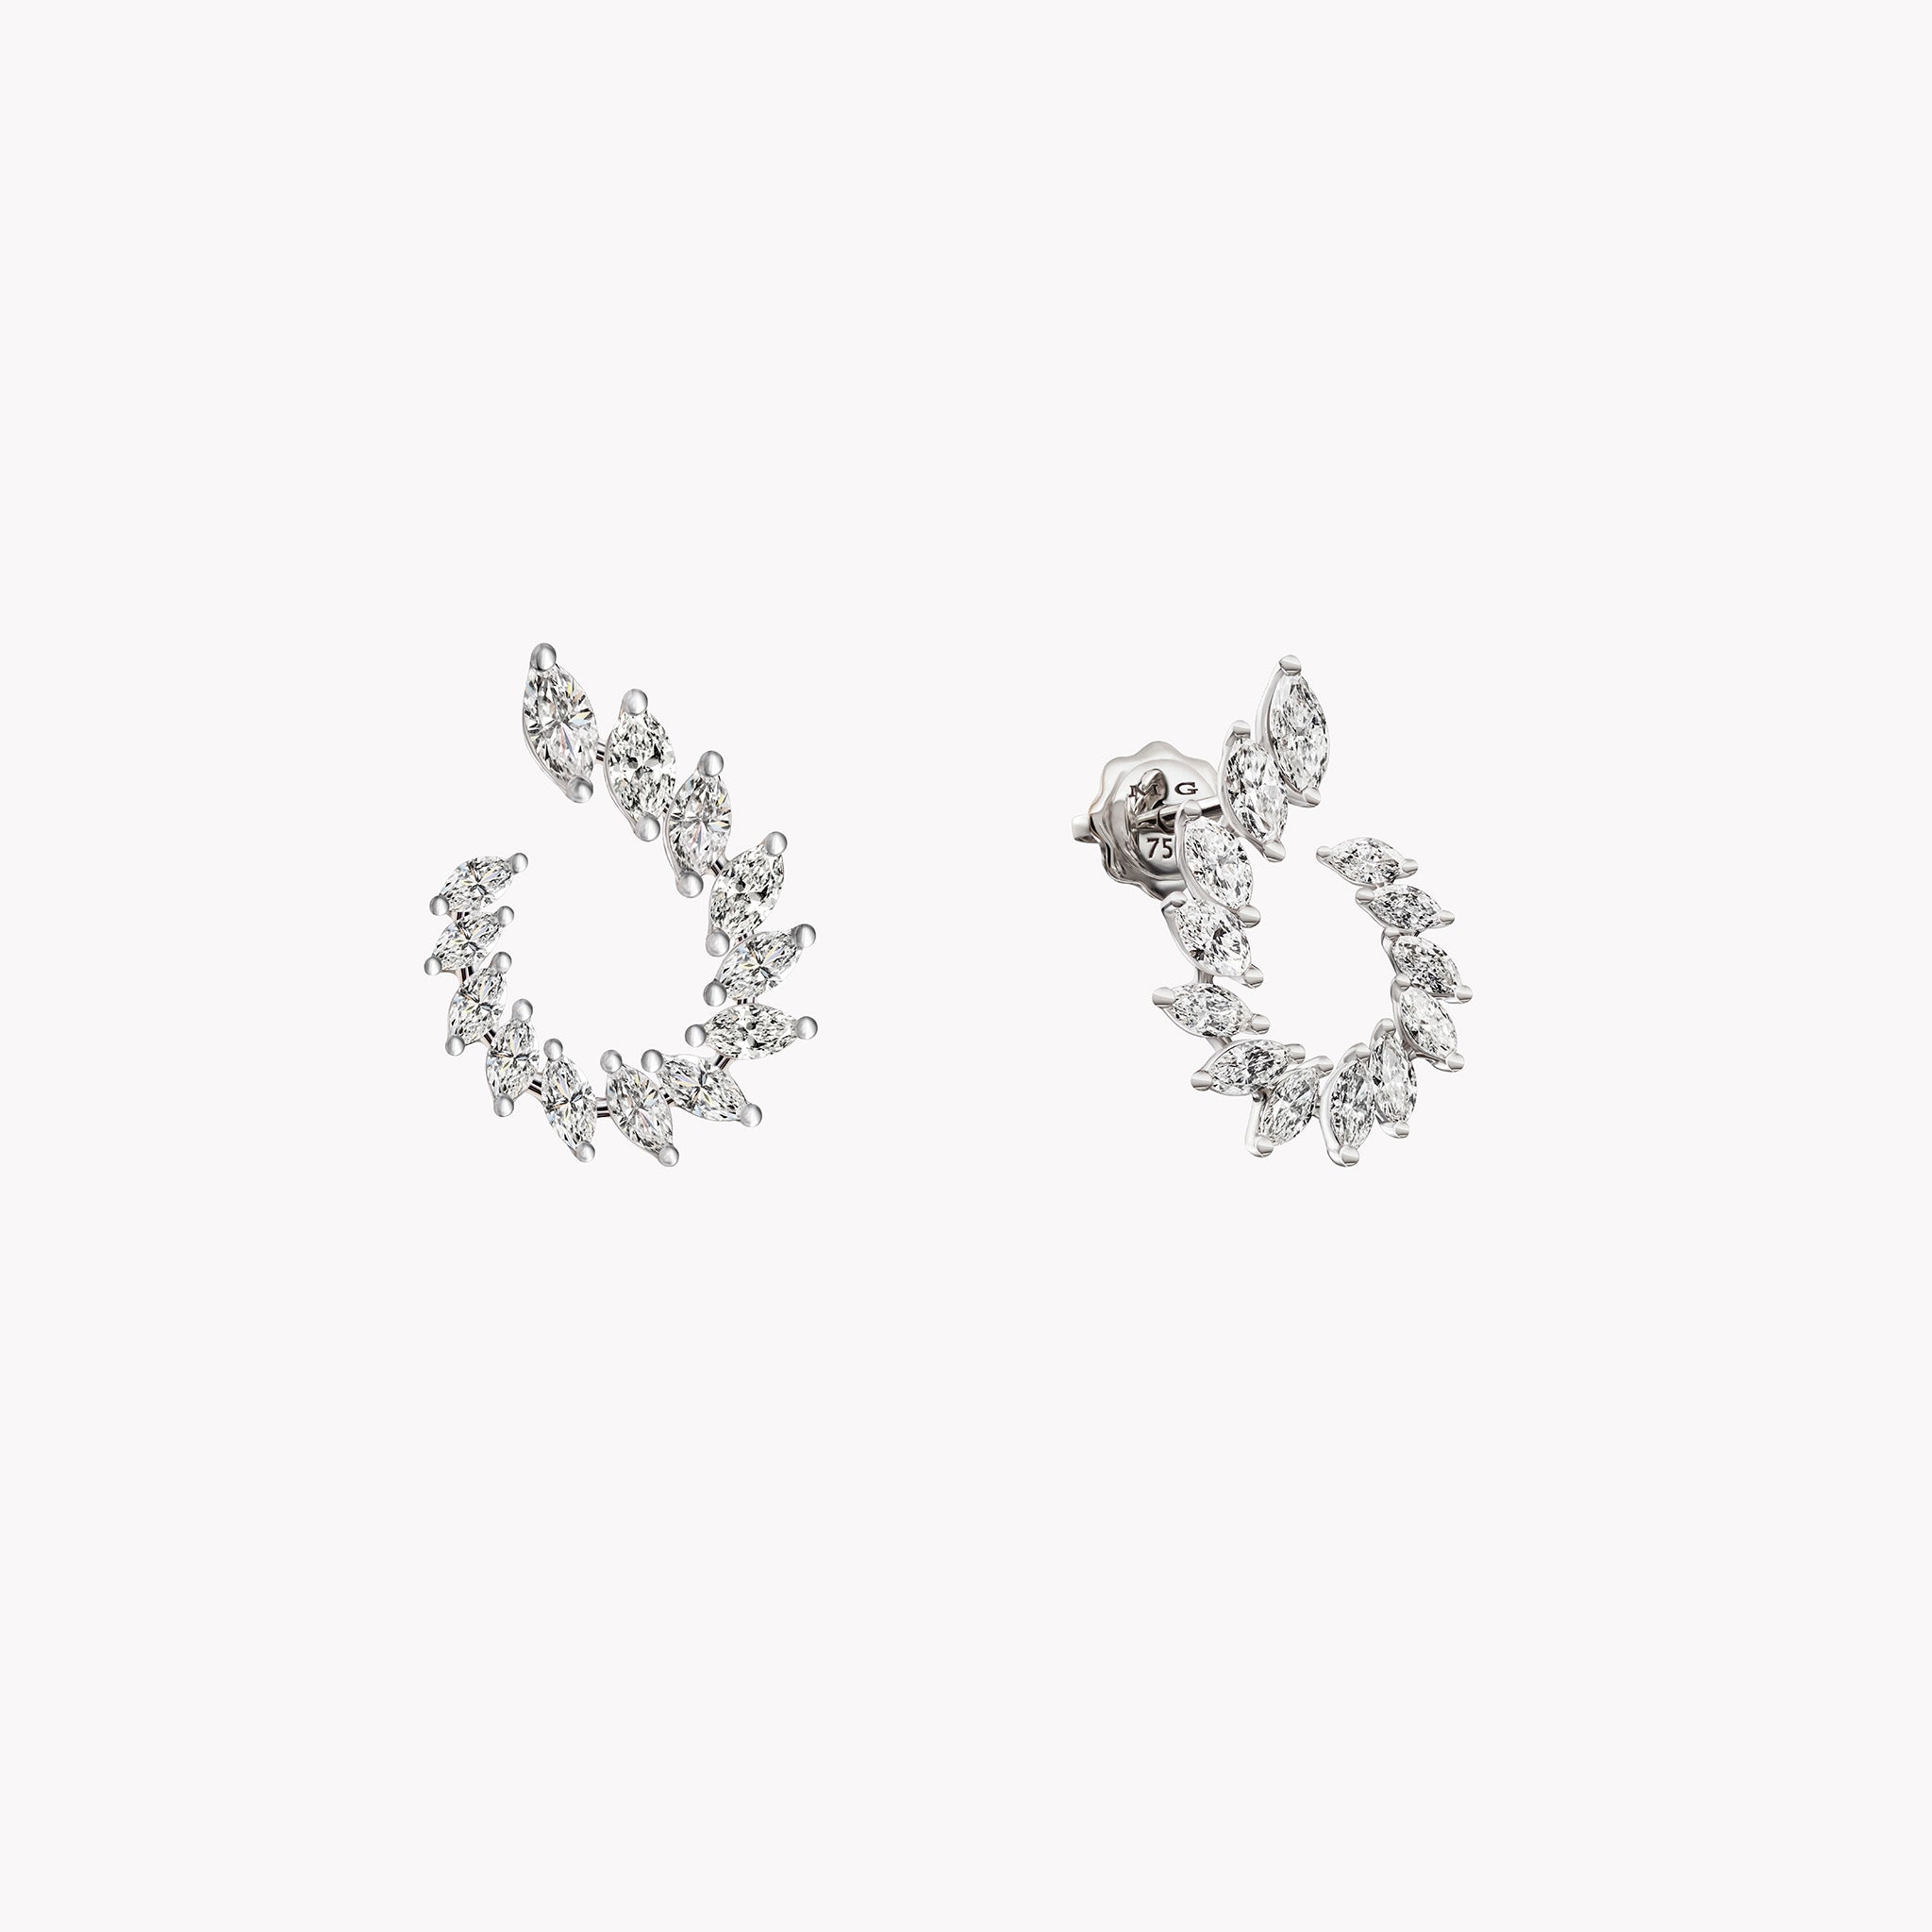 Graduated Marquise Diamond Earrings